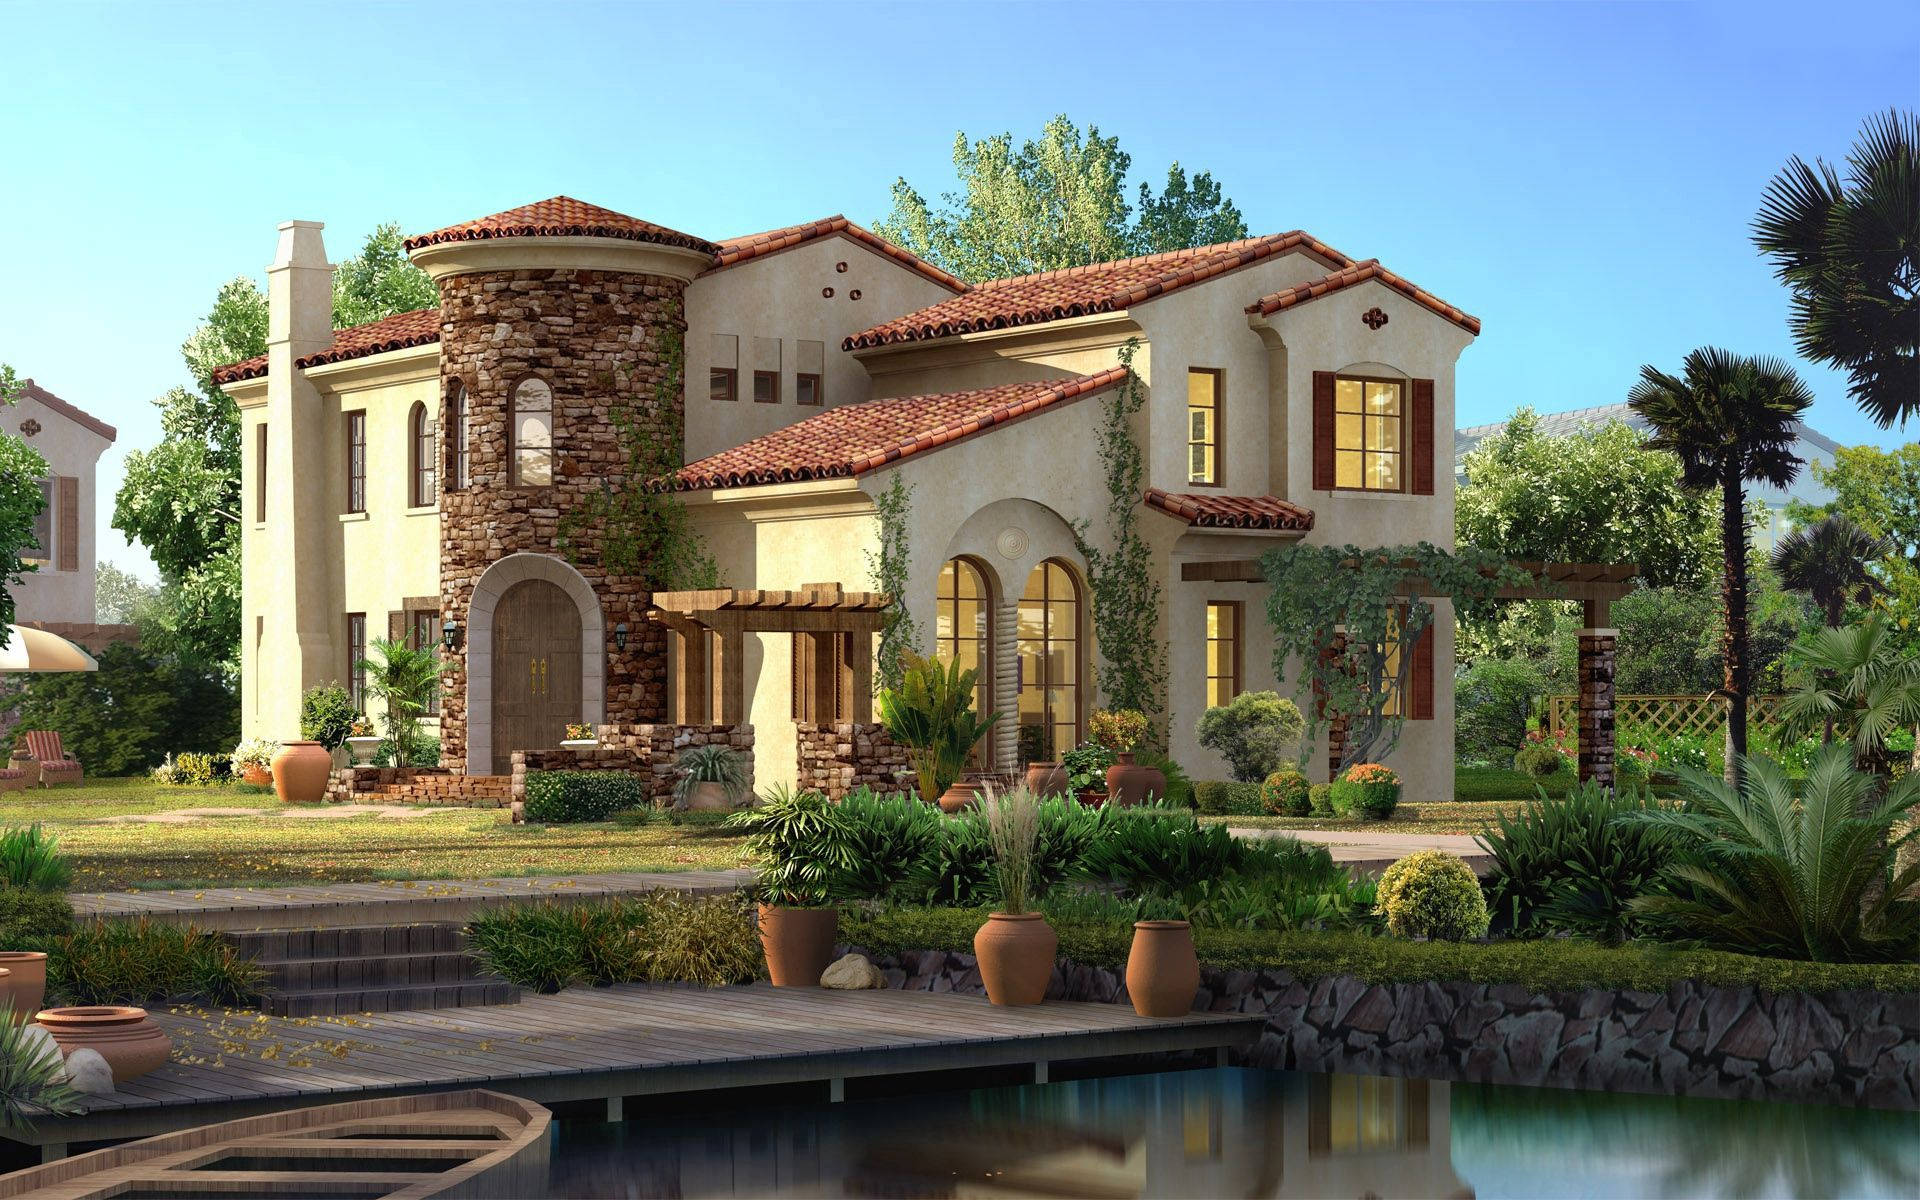 Luxury stone house with beautiful lakeside garden wallpaper.